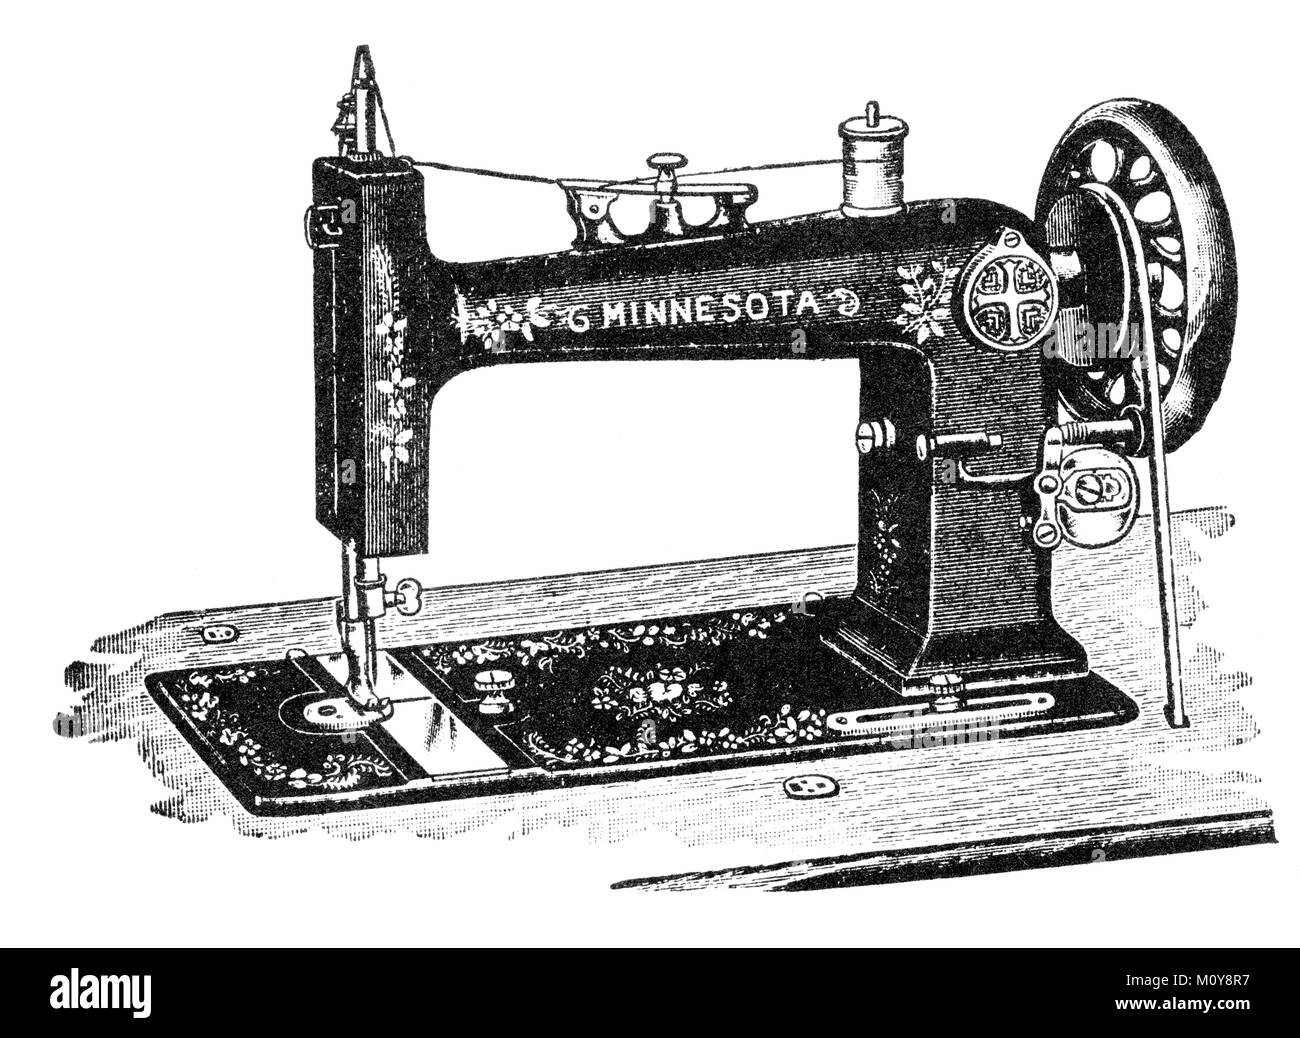 Vintage sewing machine illustration Stock Photo